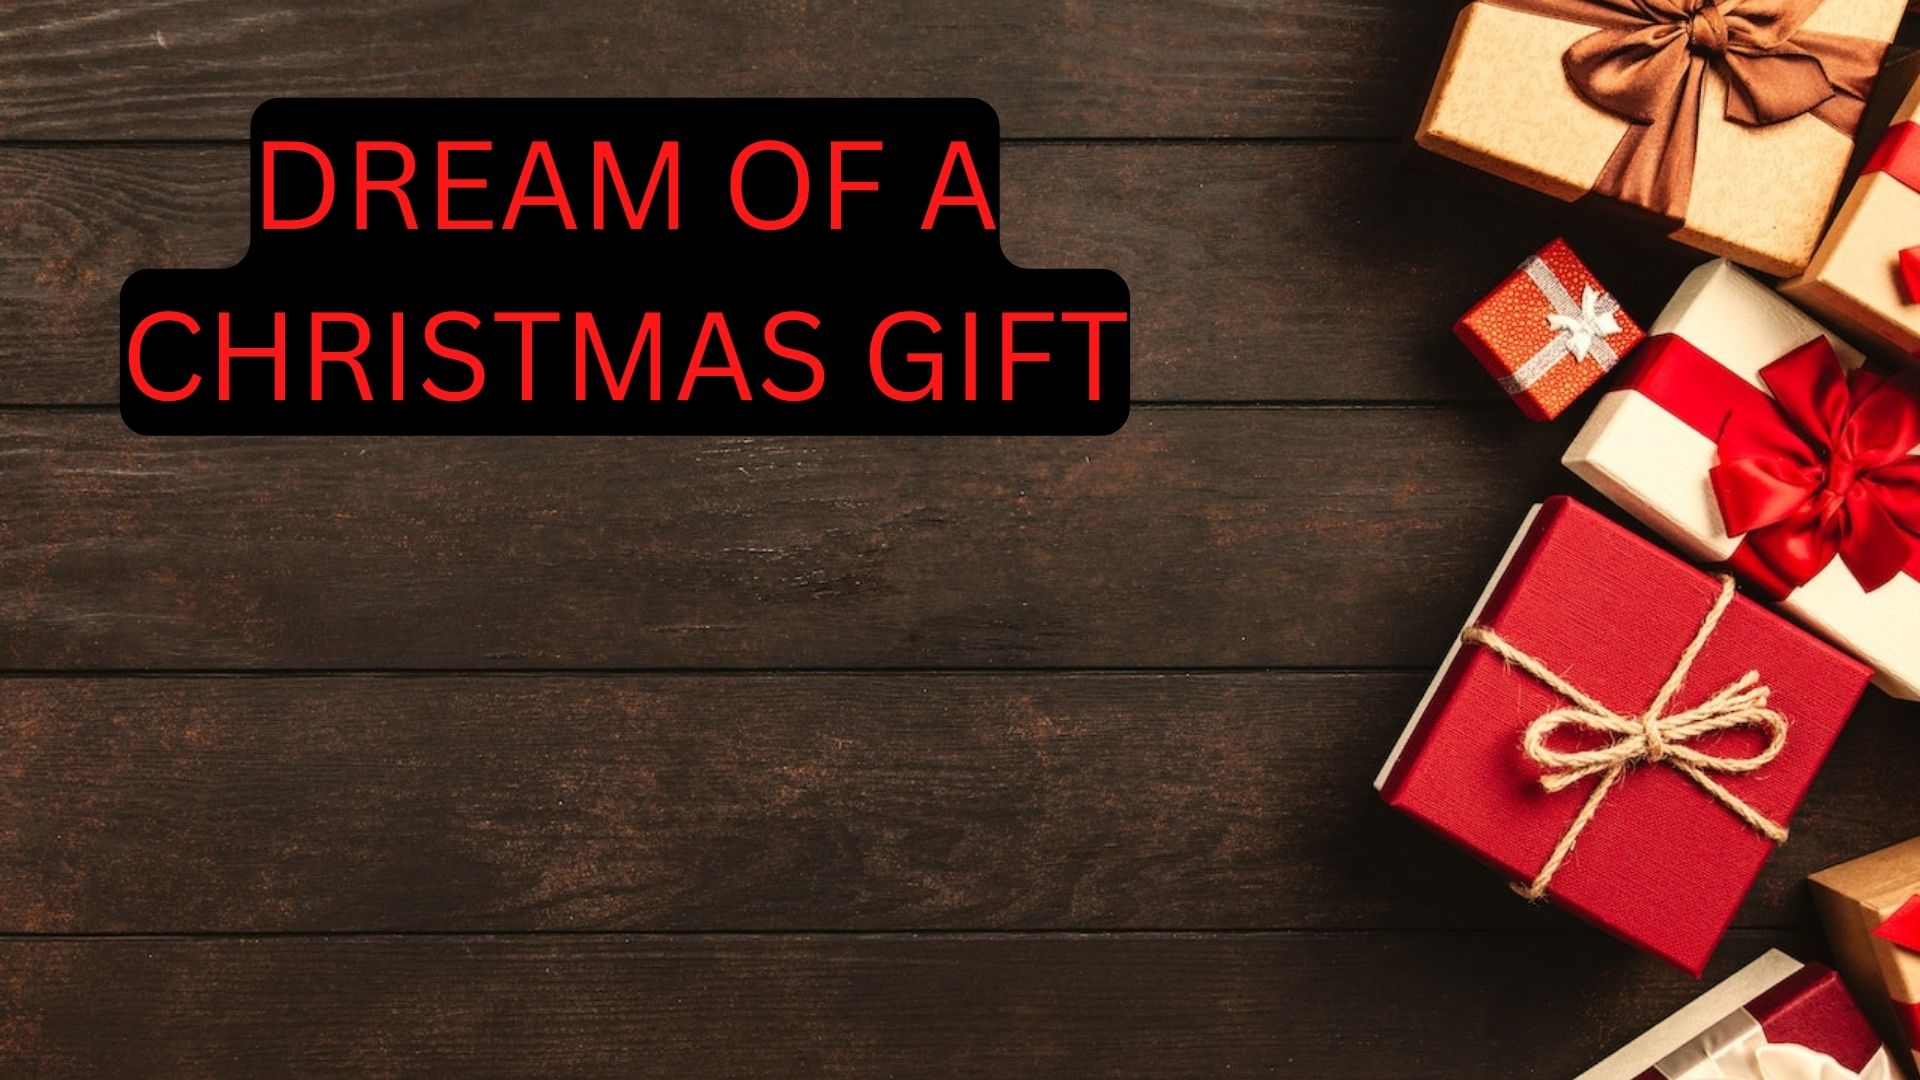 Dream Of A Christmas Gift - A Metaphor For Internal Control